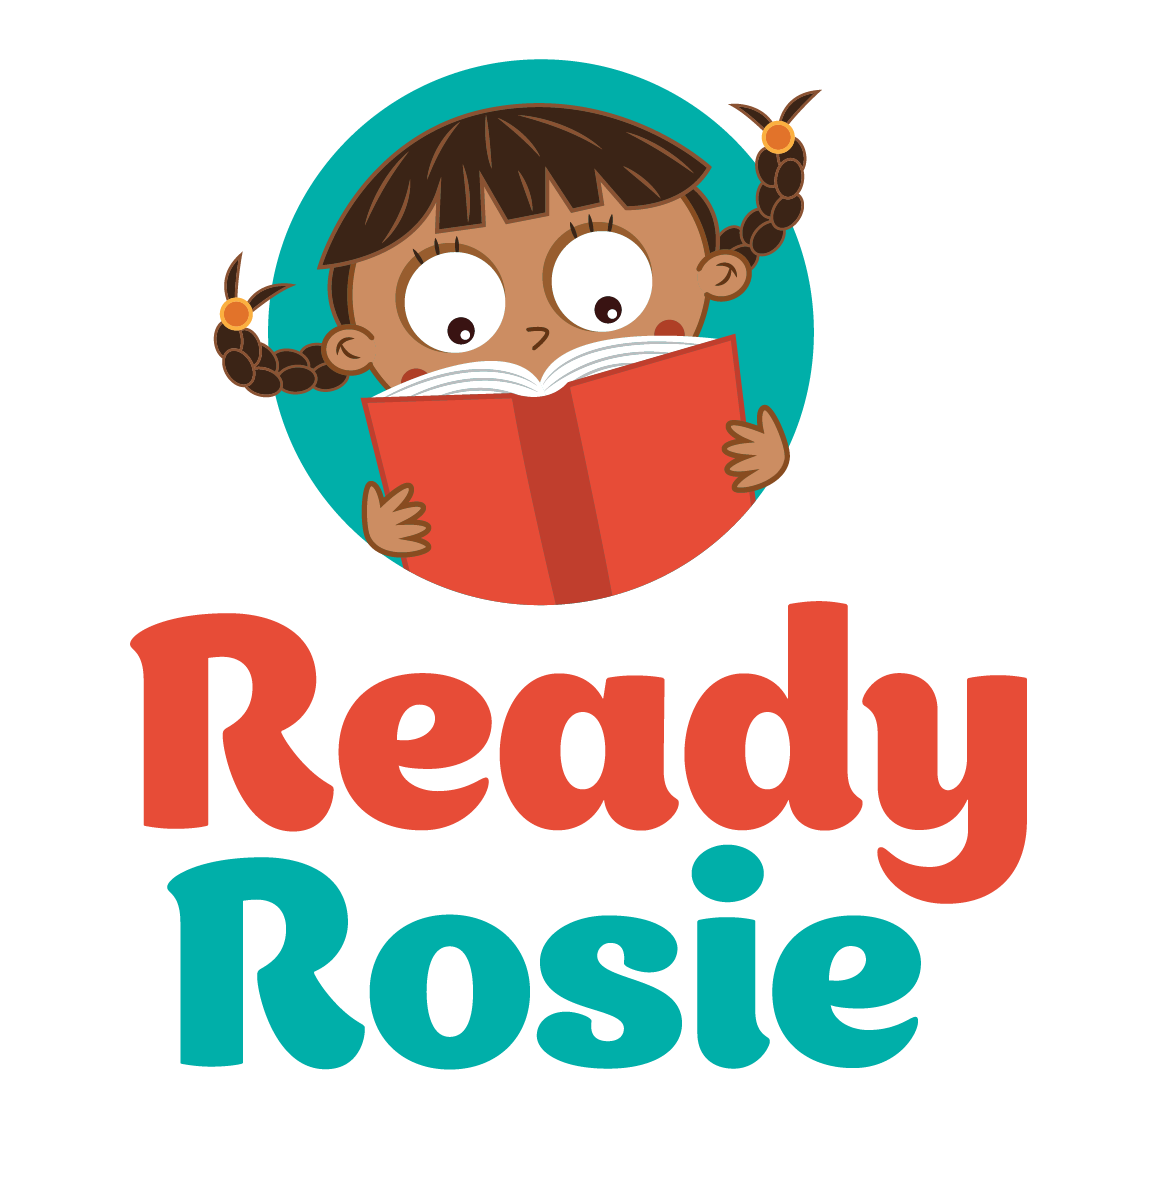 Ready Rosie